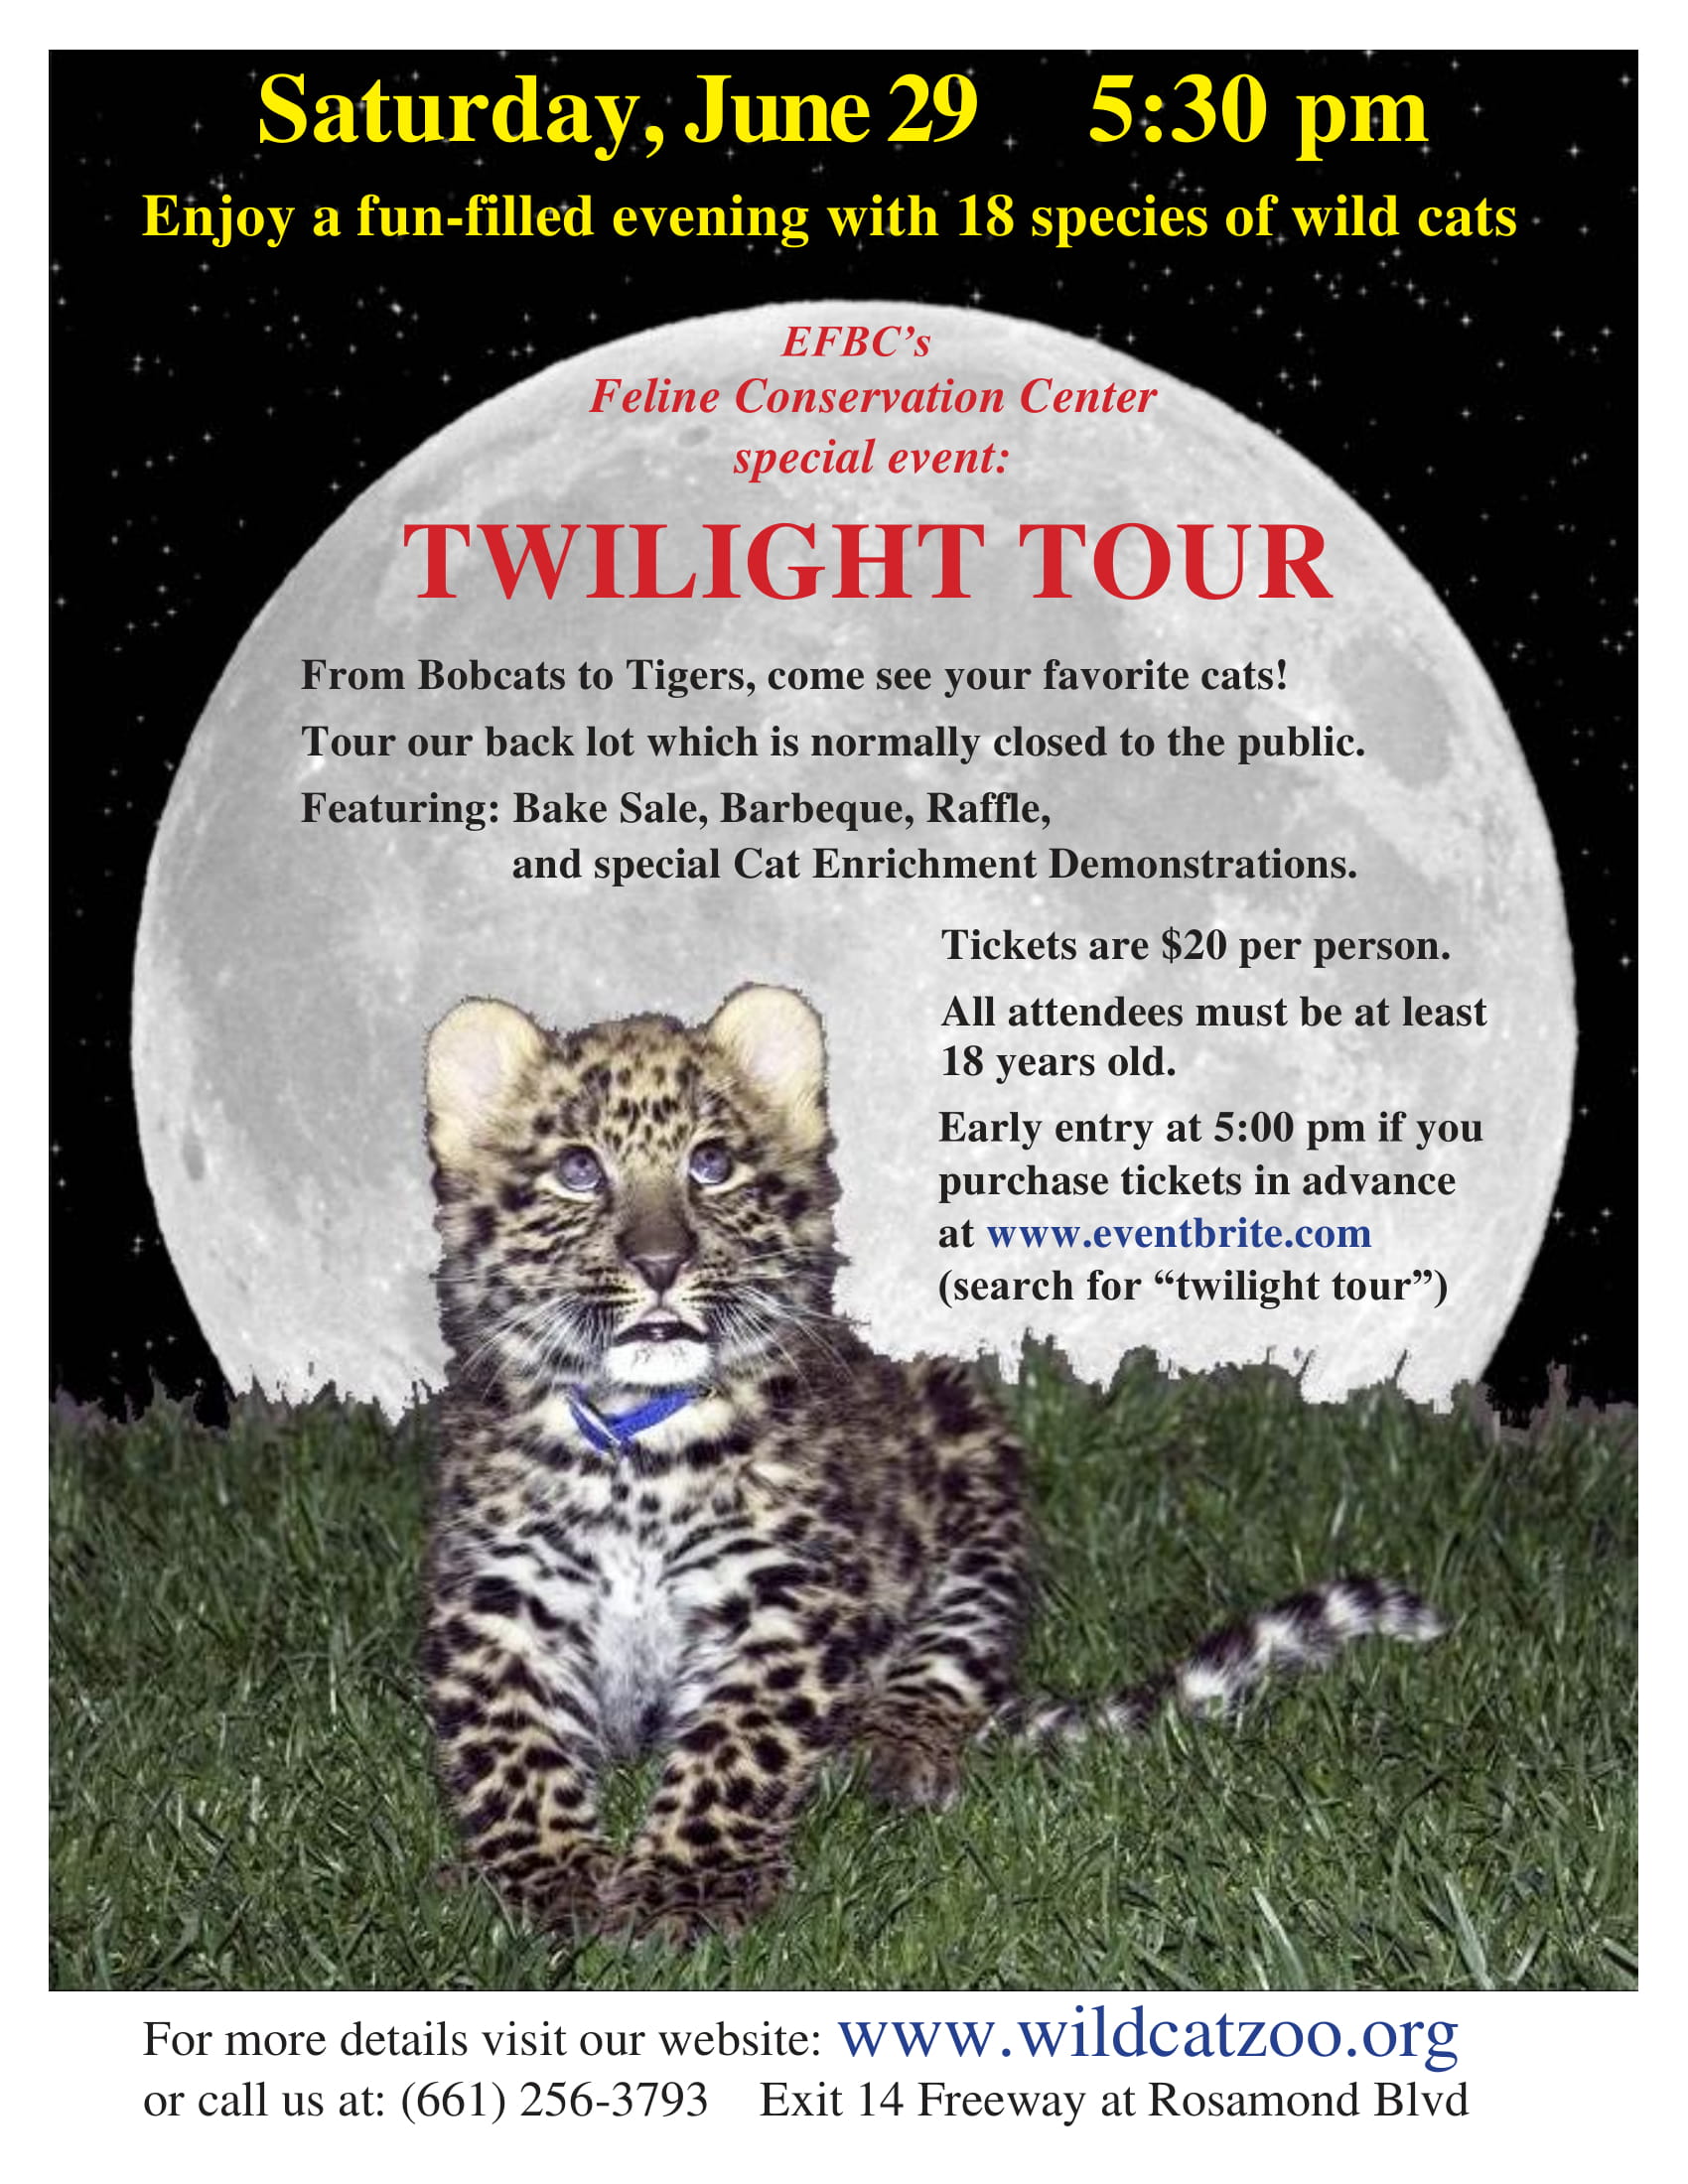 Summer 2019 Twilight Tour at EFBC's Feline Conservation Center, Kern, California, United States